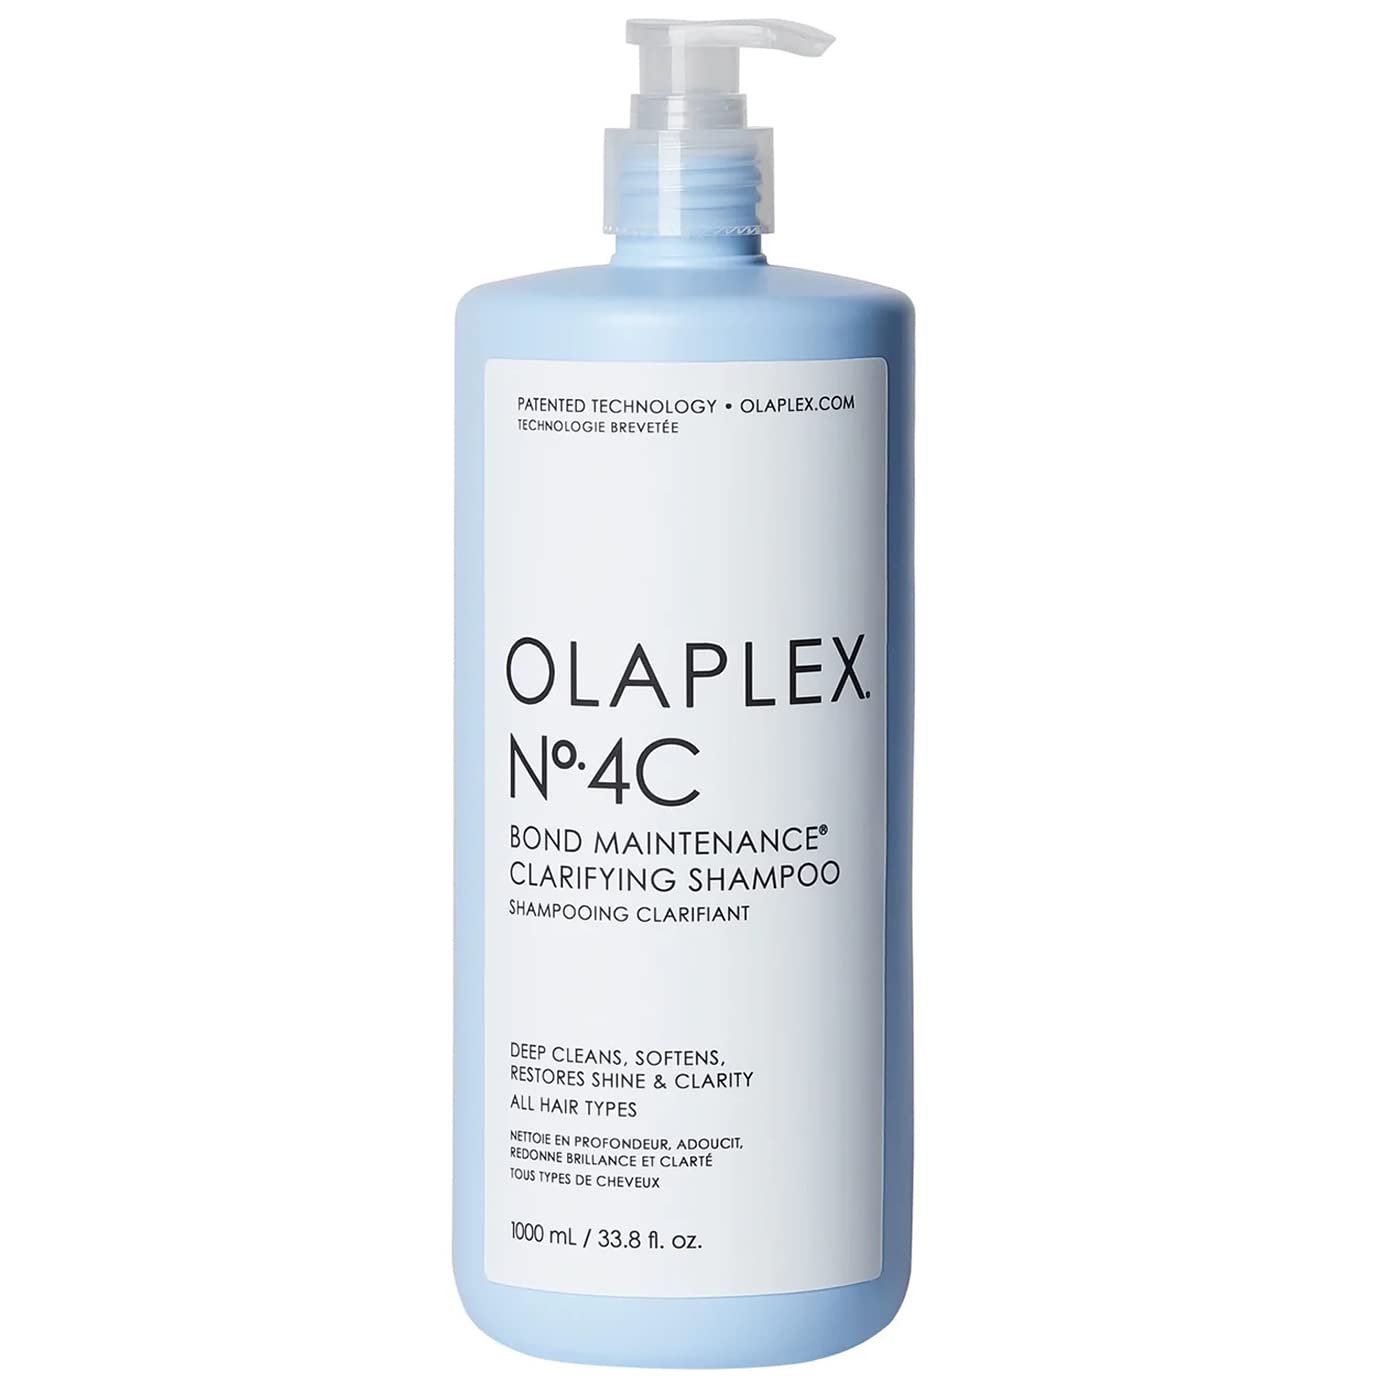 No. 4C Bond Maintenance™ Clarifying Shampoo